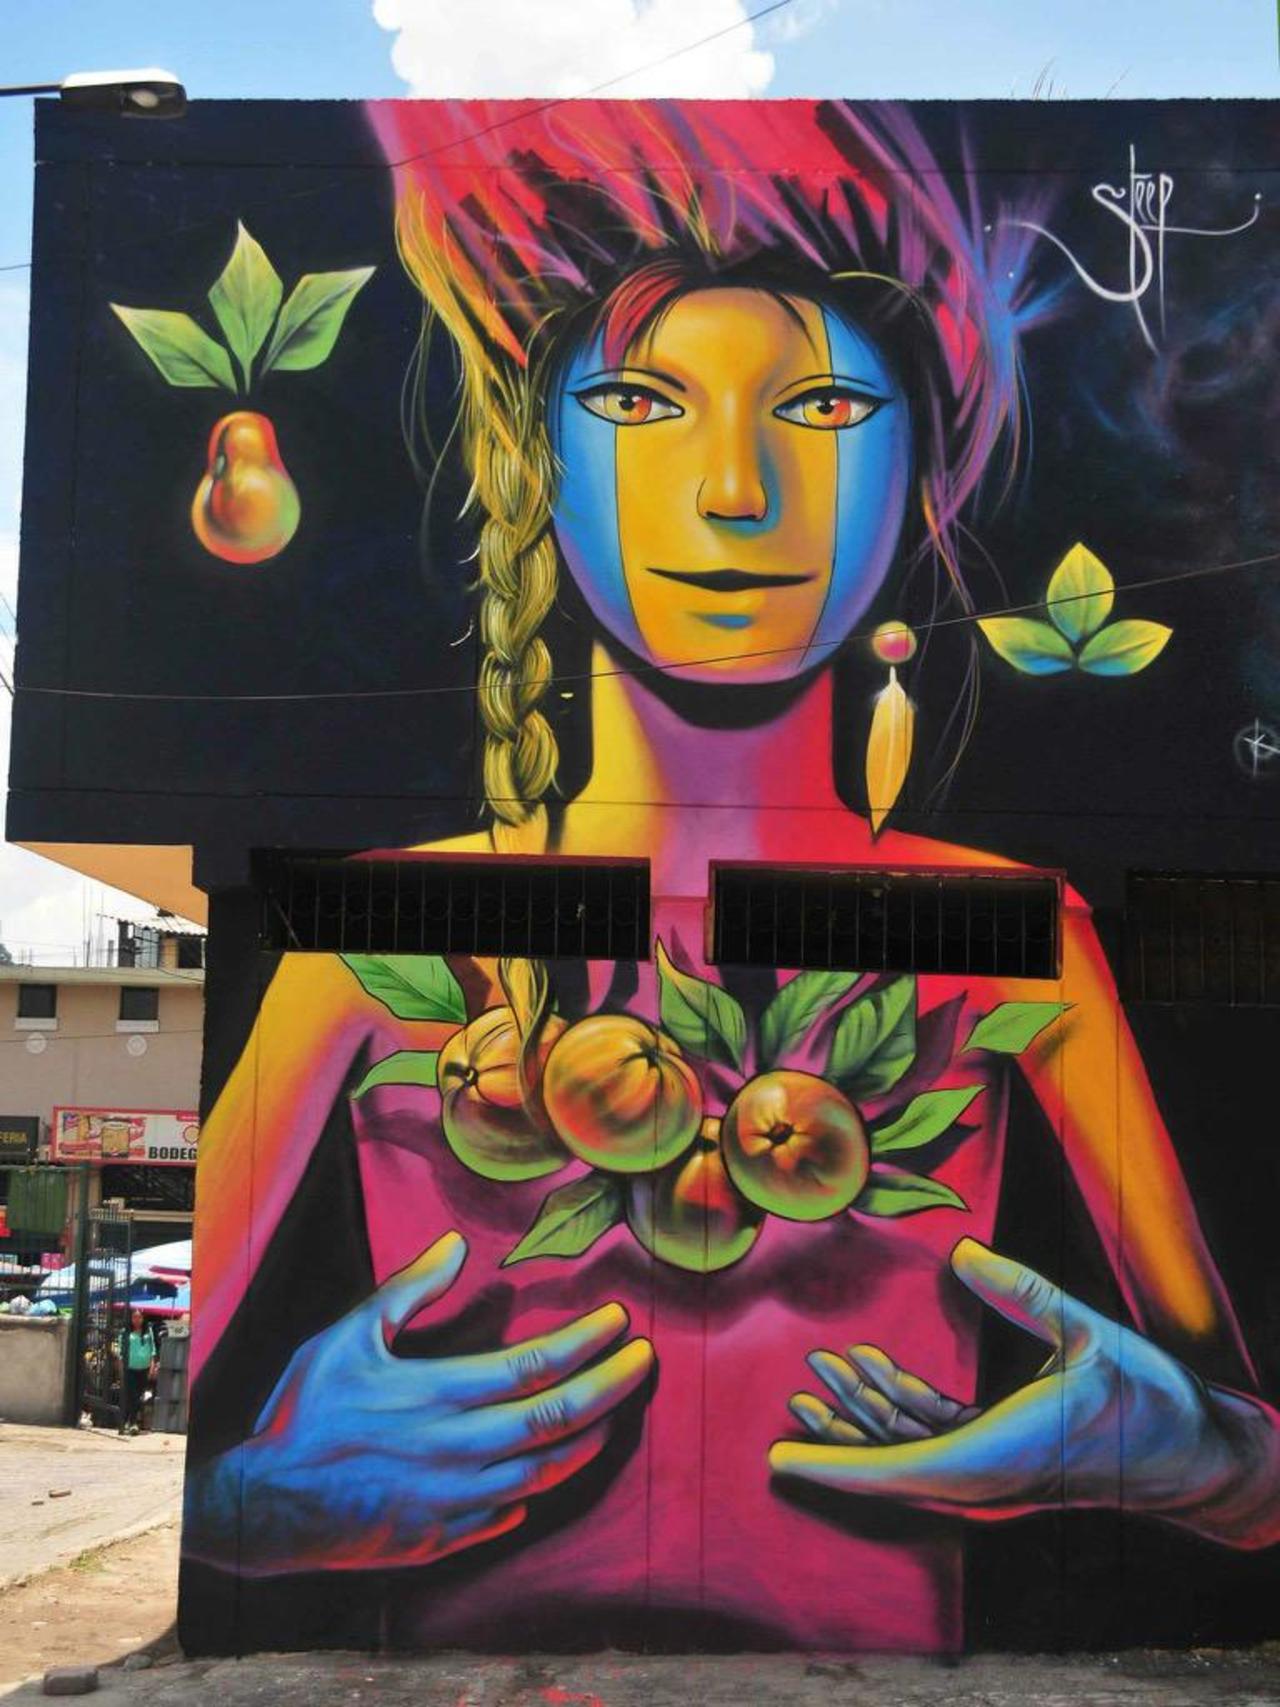 Street Art by Steep

#art #graffiti #mural #streetart http://t.co/HgJGE2JCrq